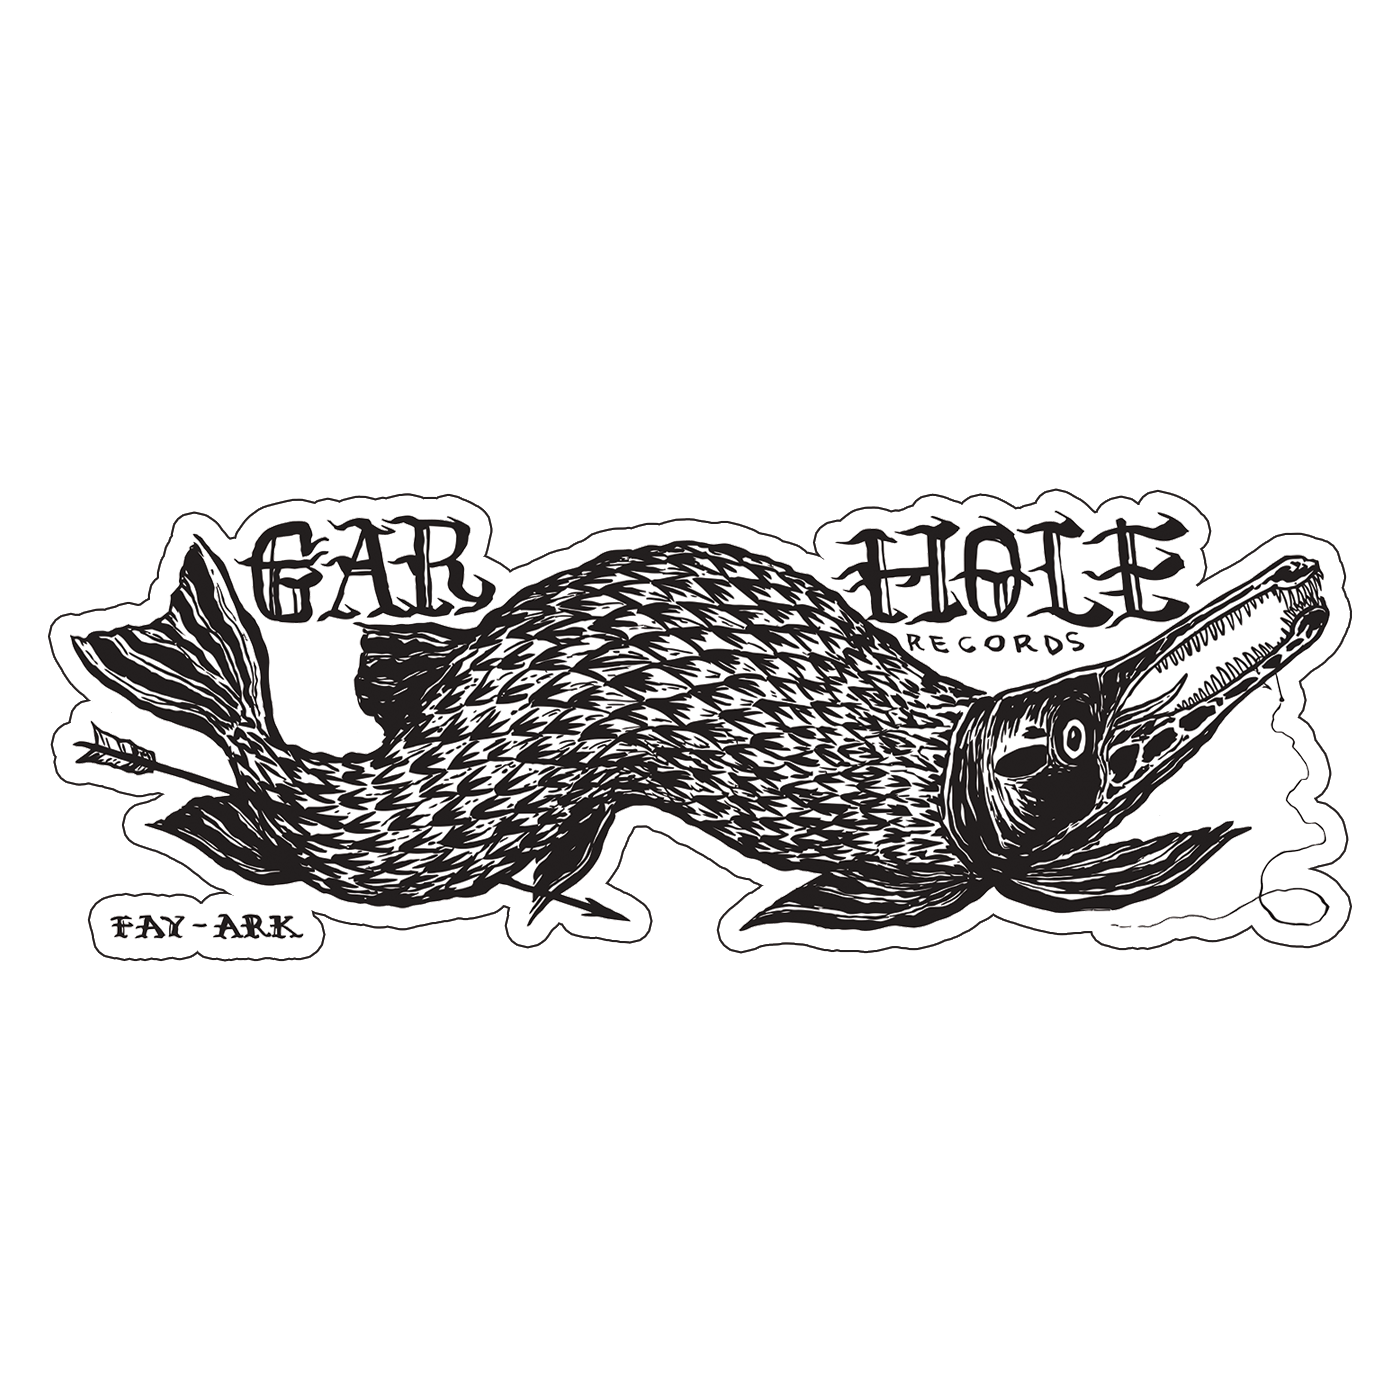 Gar Hole Records Bumper Sticker